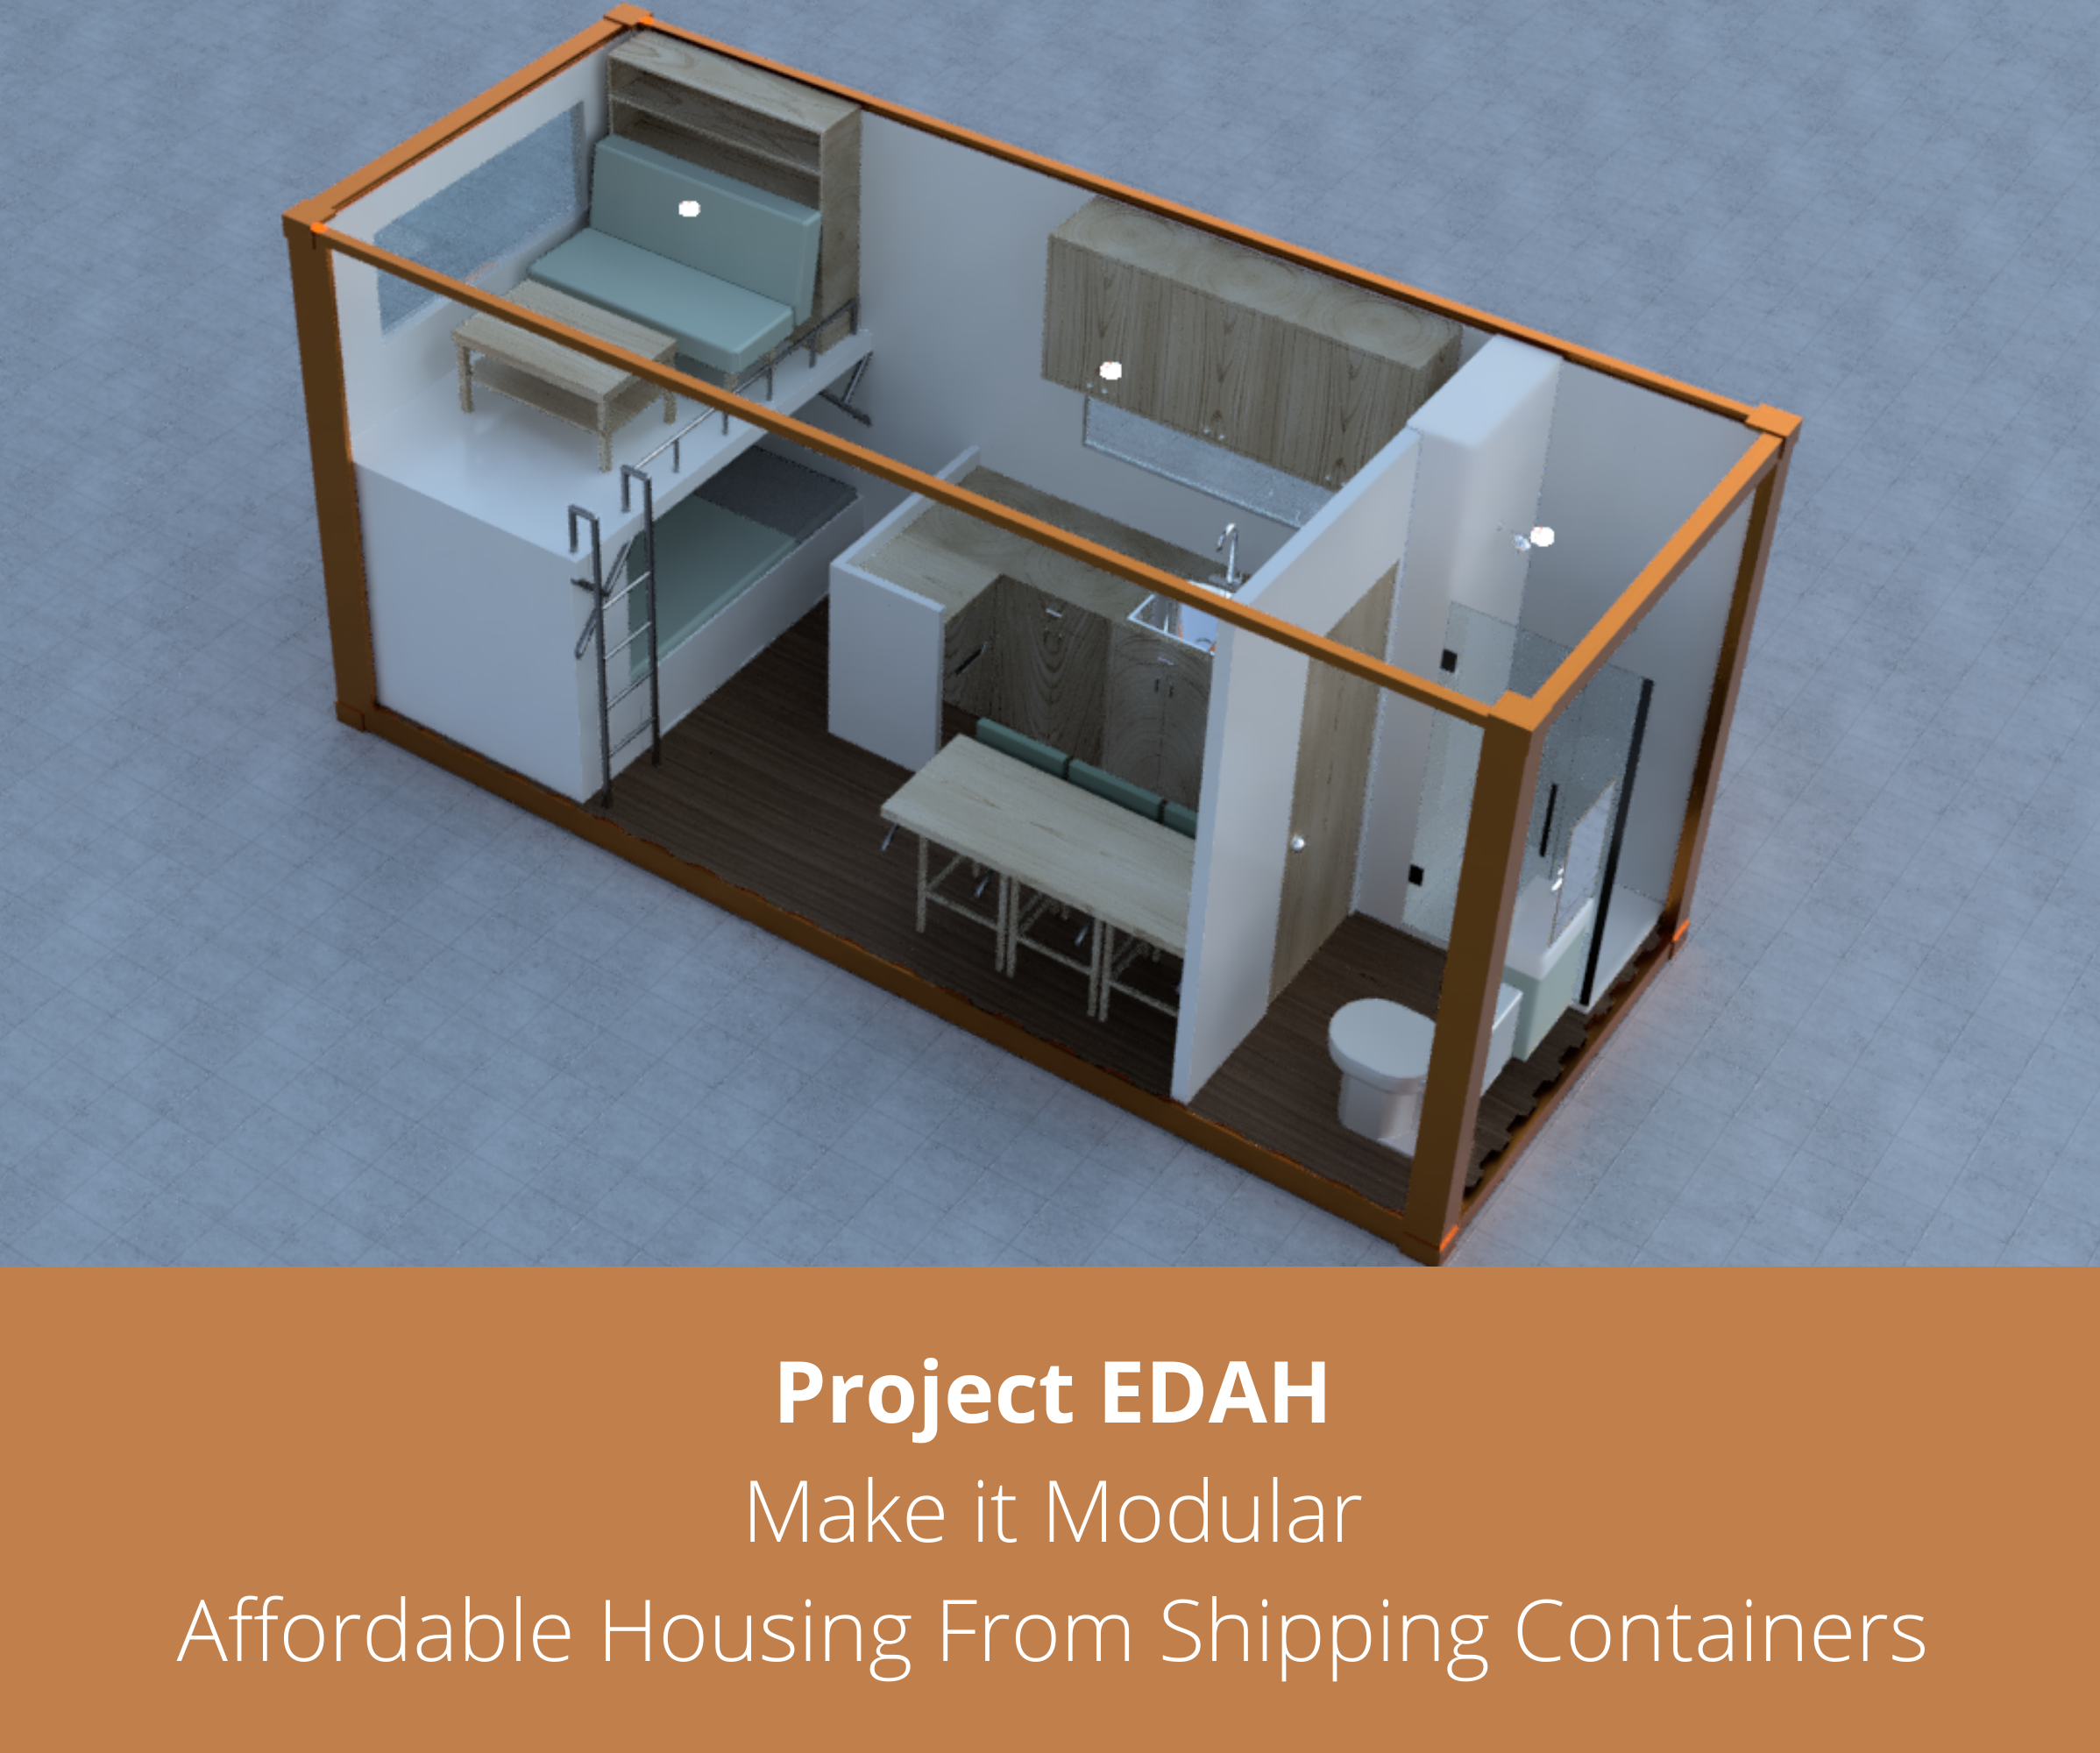 Make It Modular: Project EDAH